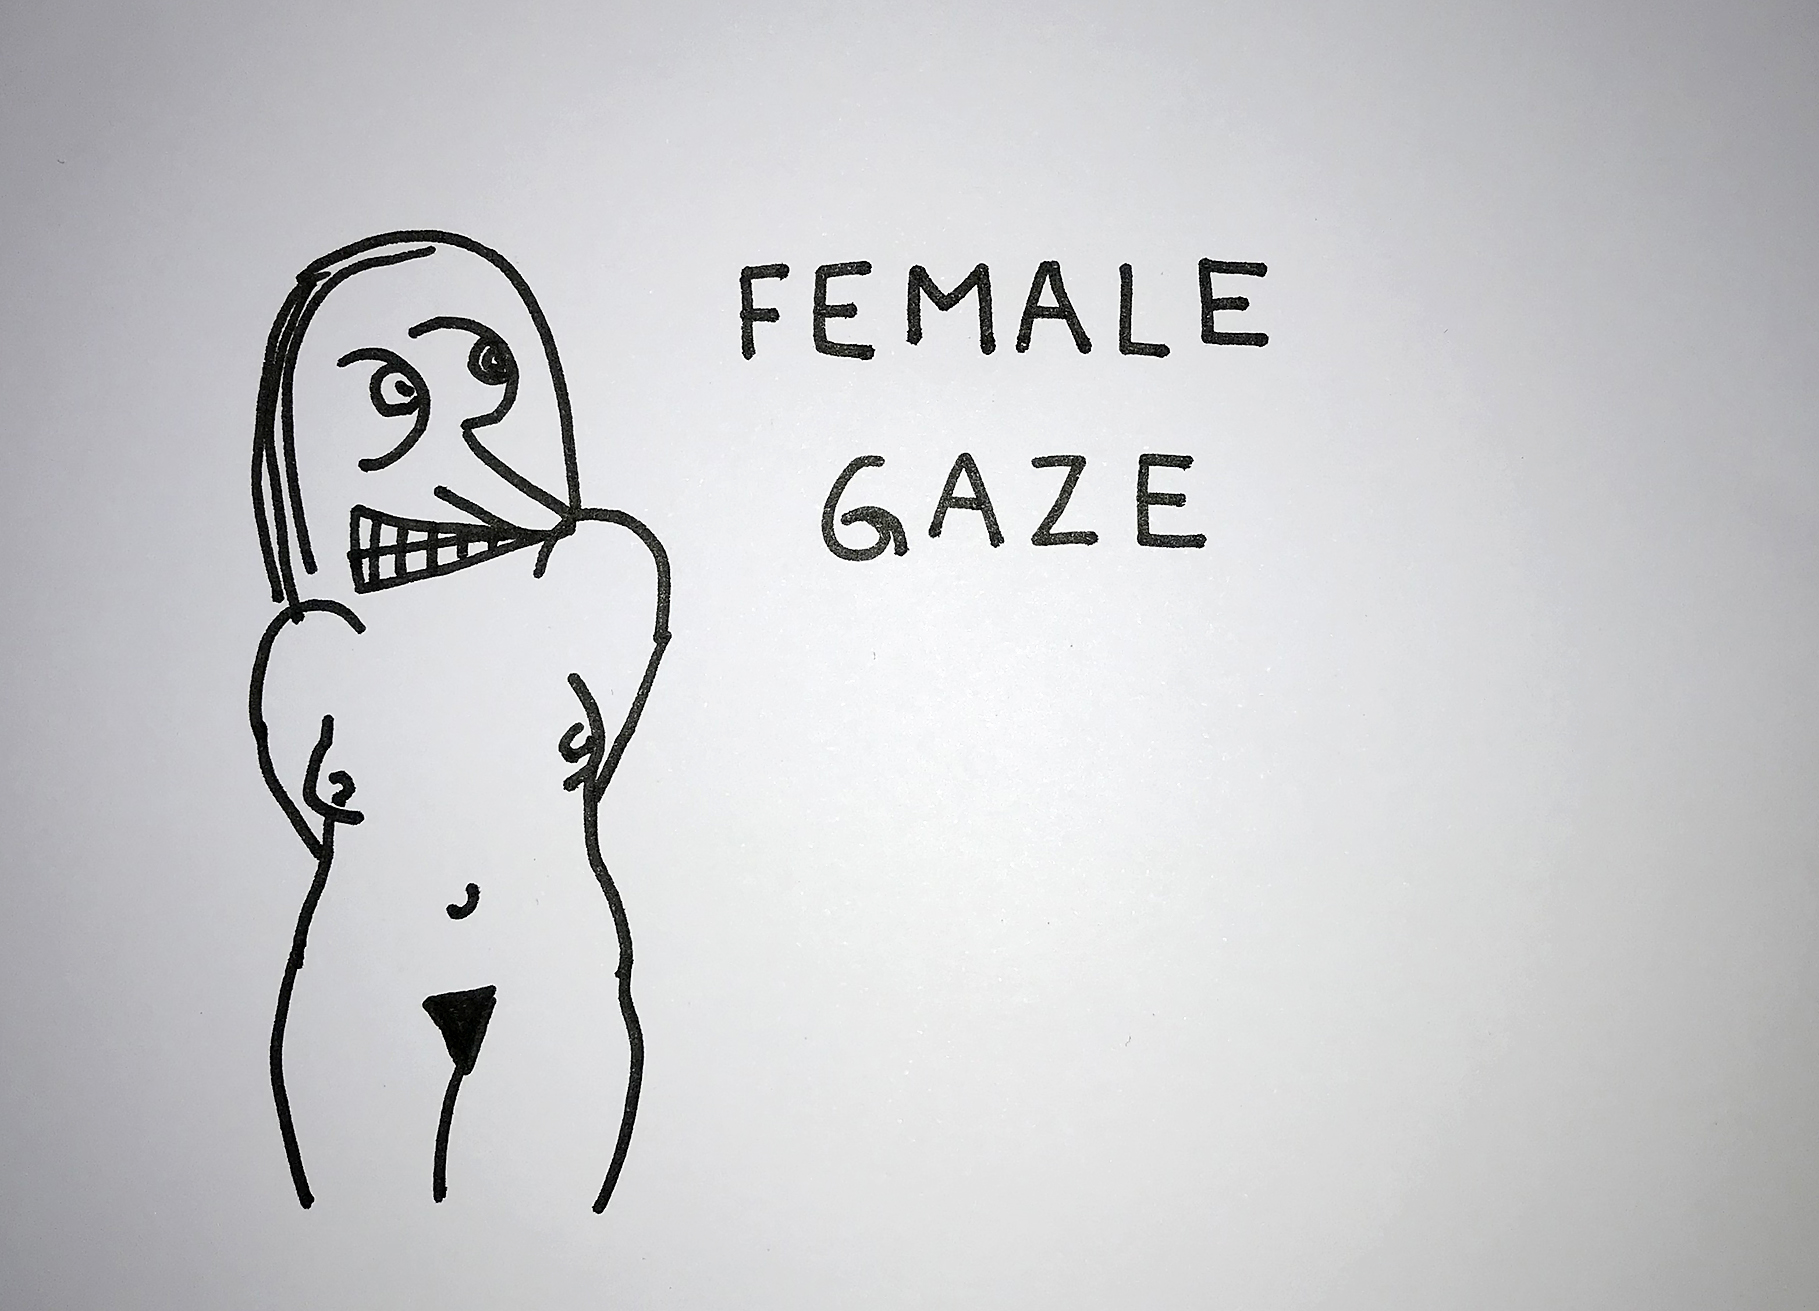 Female Gaze